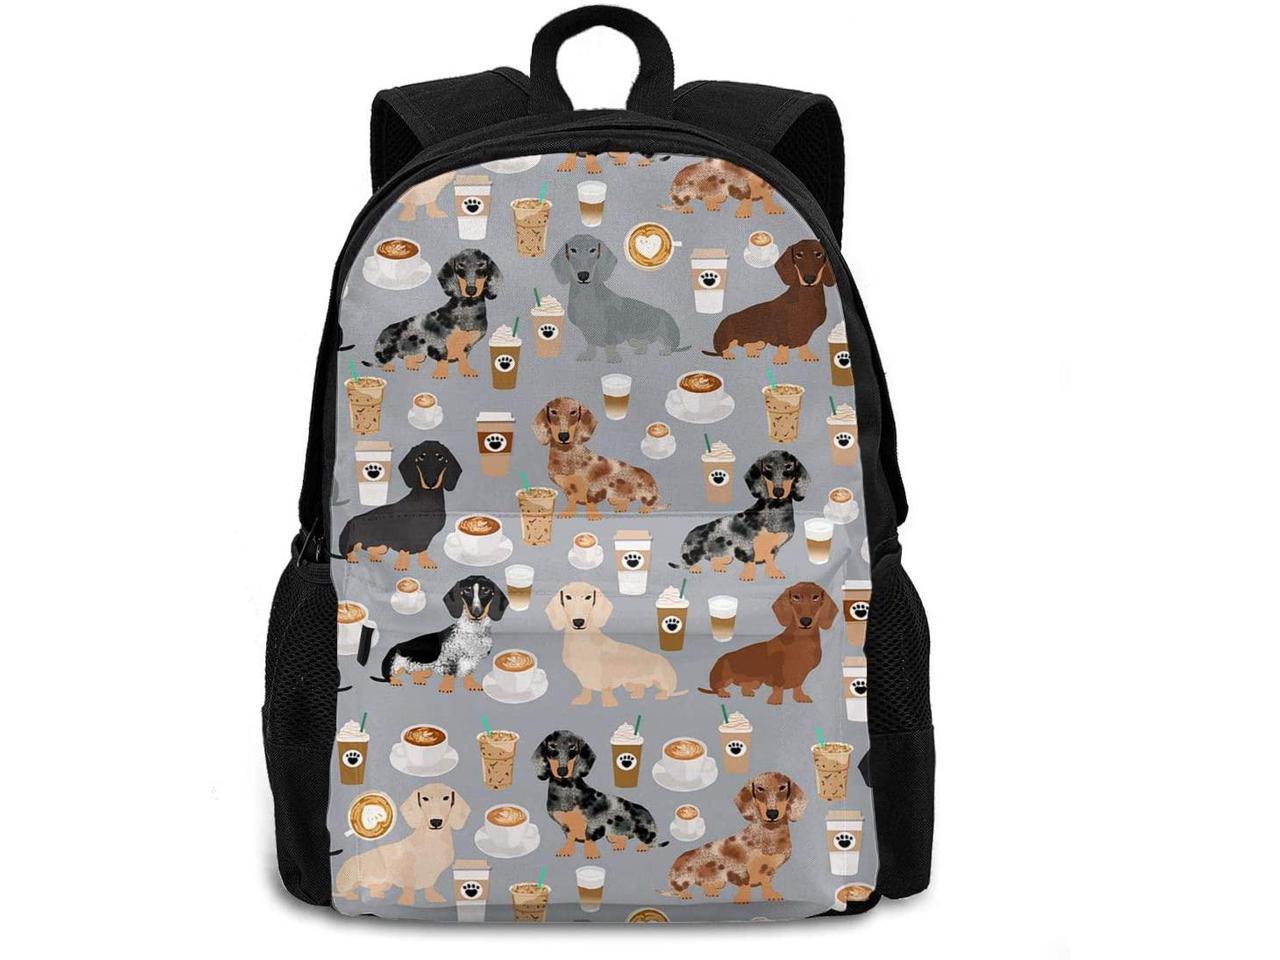 Siawasey Anime Assassination Classroom Cosplay Backpack Daypack Bookbag Laptop School Bag